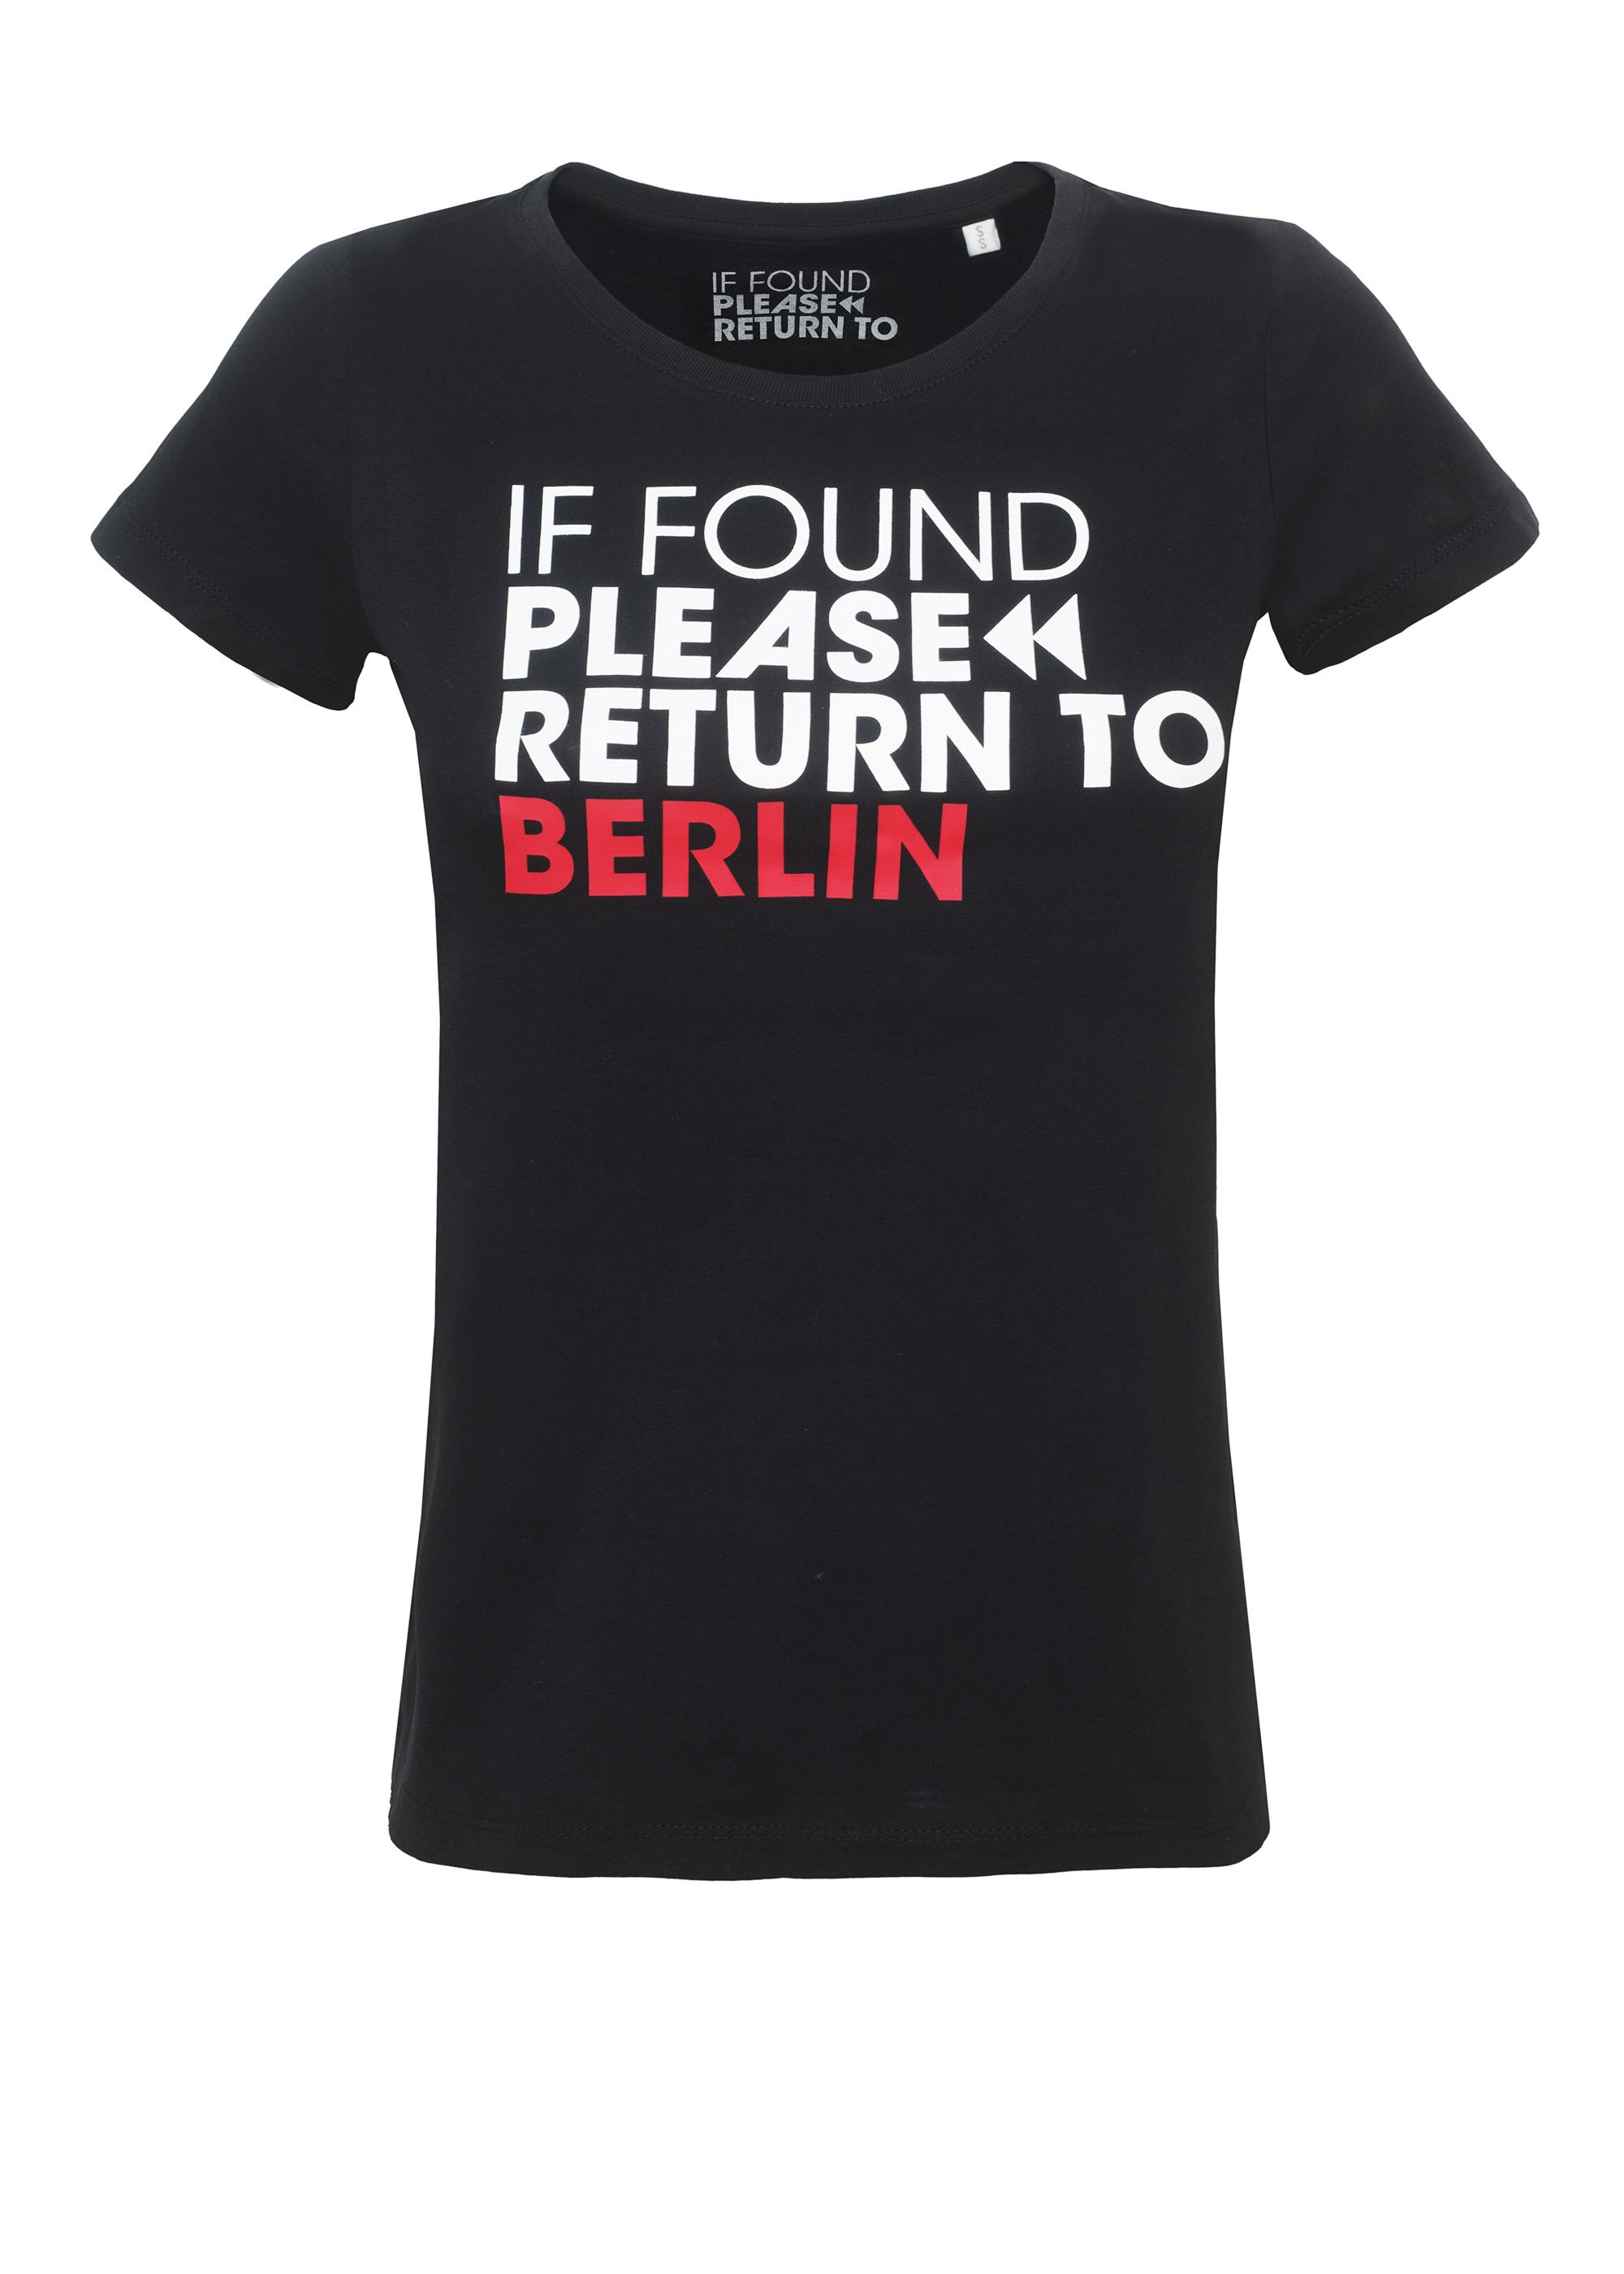 If found, return to Berlin Shirt